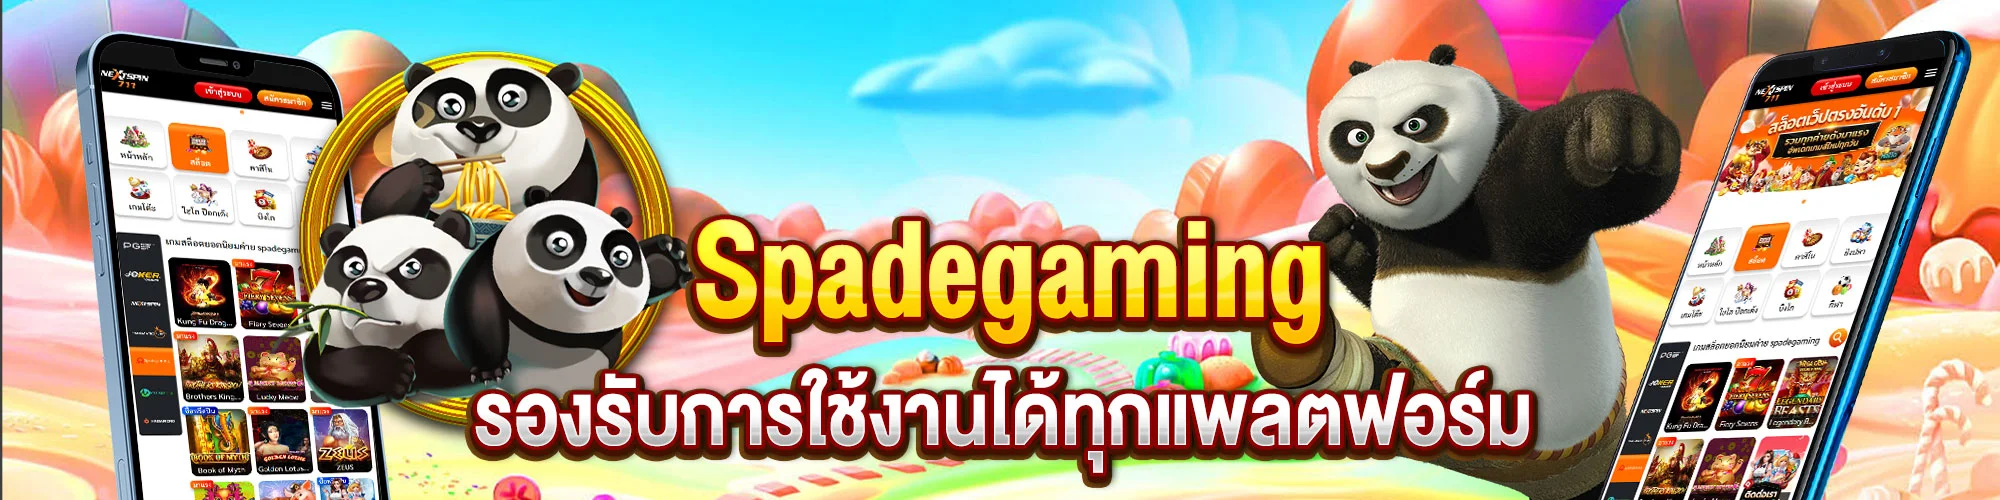 Spade Gaming รองรับการใช้งานได้ทุกแพลตฟอร์ม